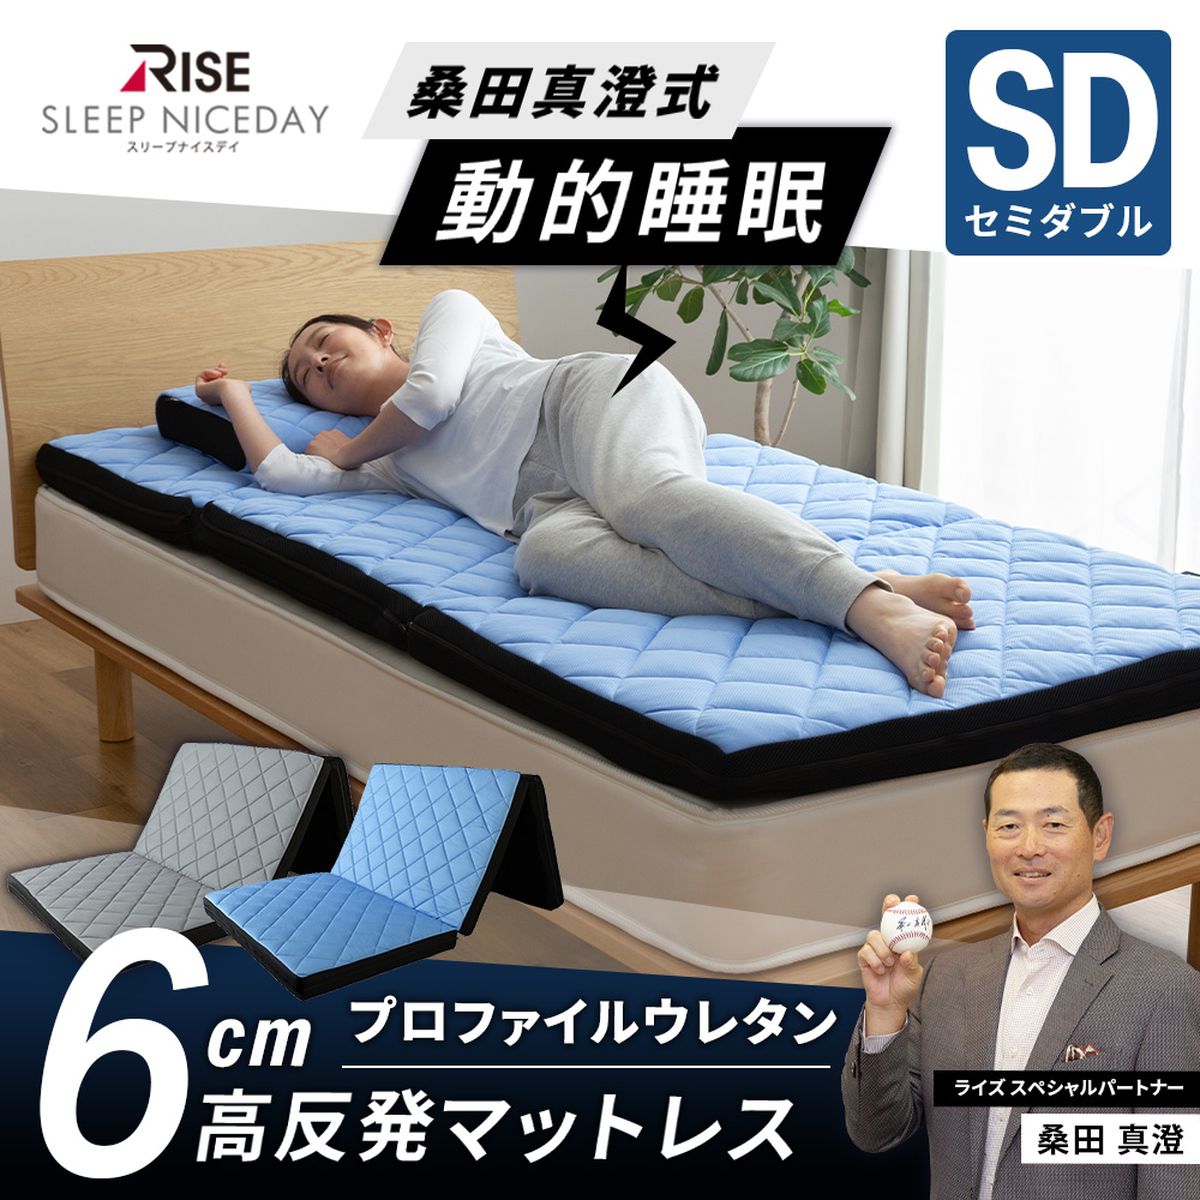 RISE Sleep Niceday 桑田真澄式 動的睡眠 高反発マットレス6cm セミダブル グレー